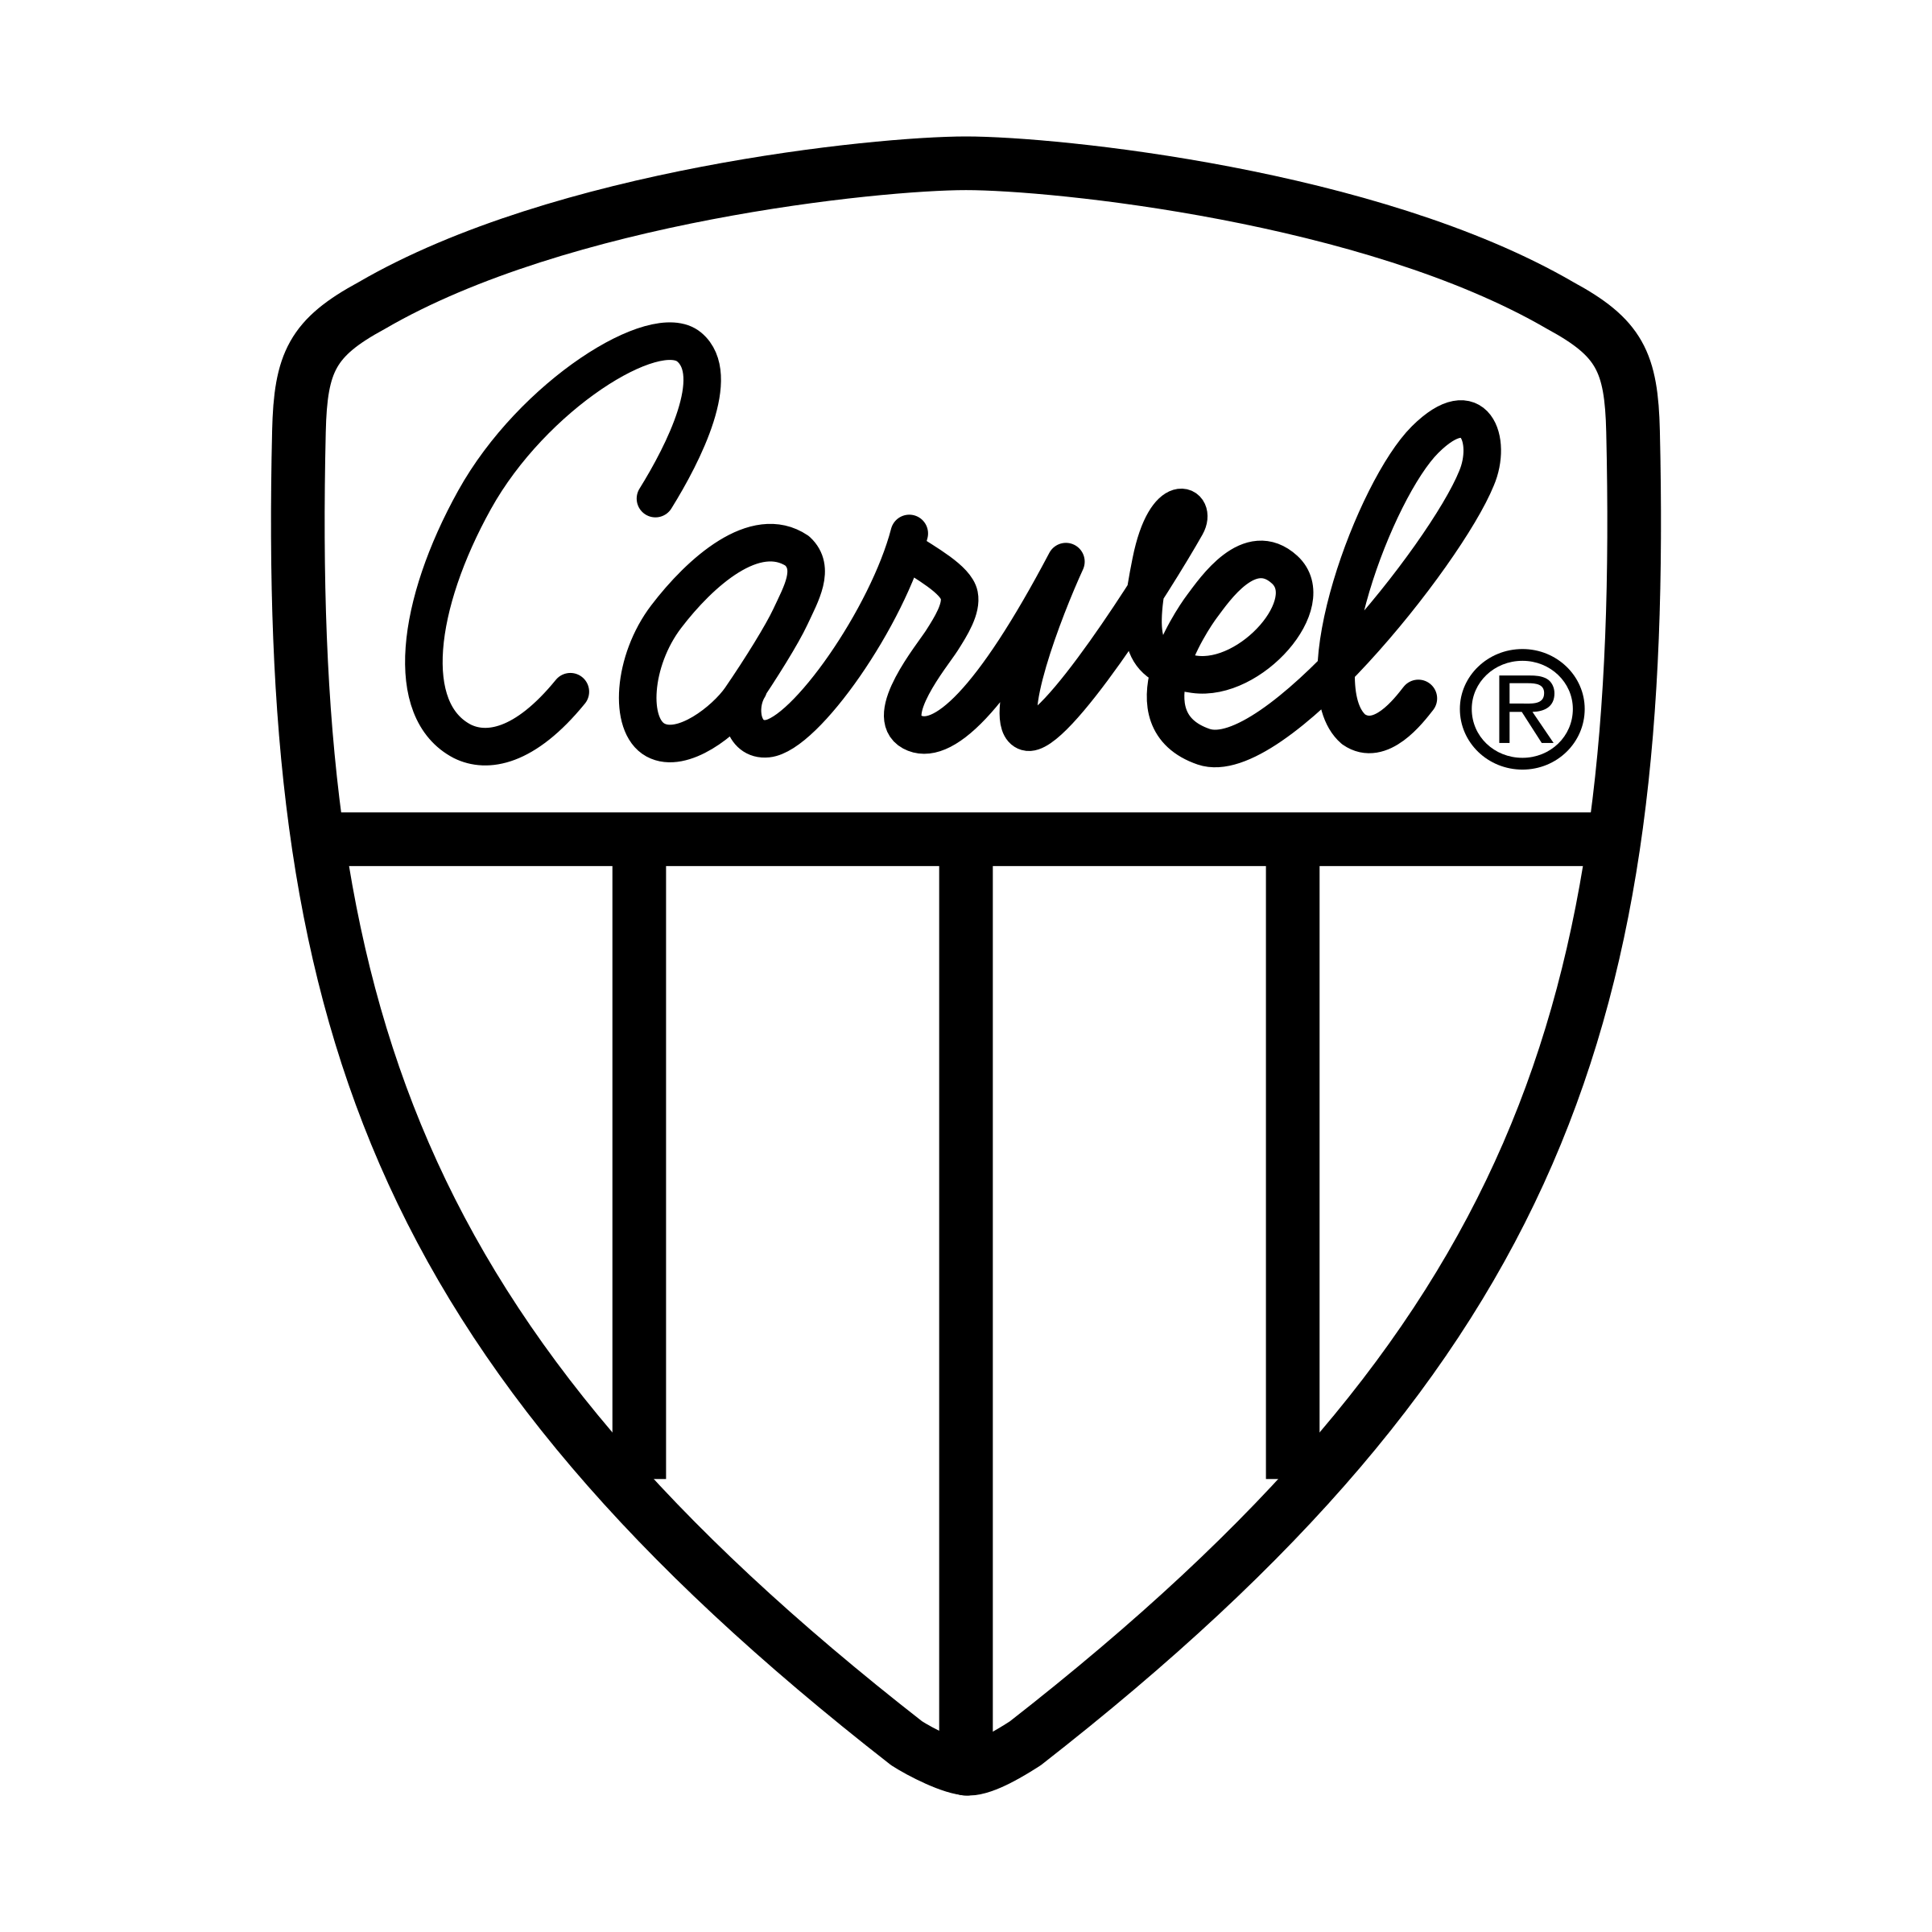 Carvel Logo - Carvel Ice Cream Logo PNG Transparent & SVG Vector